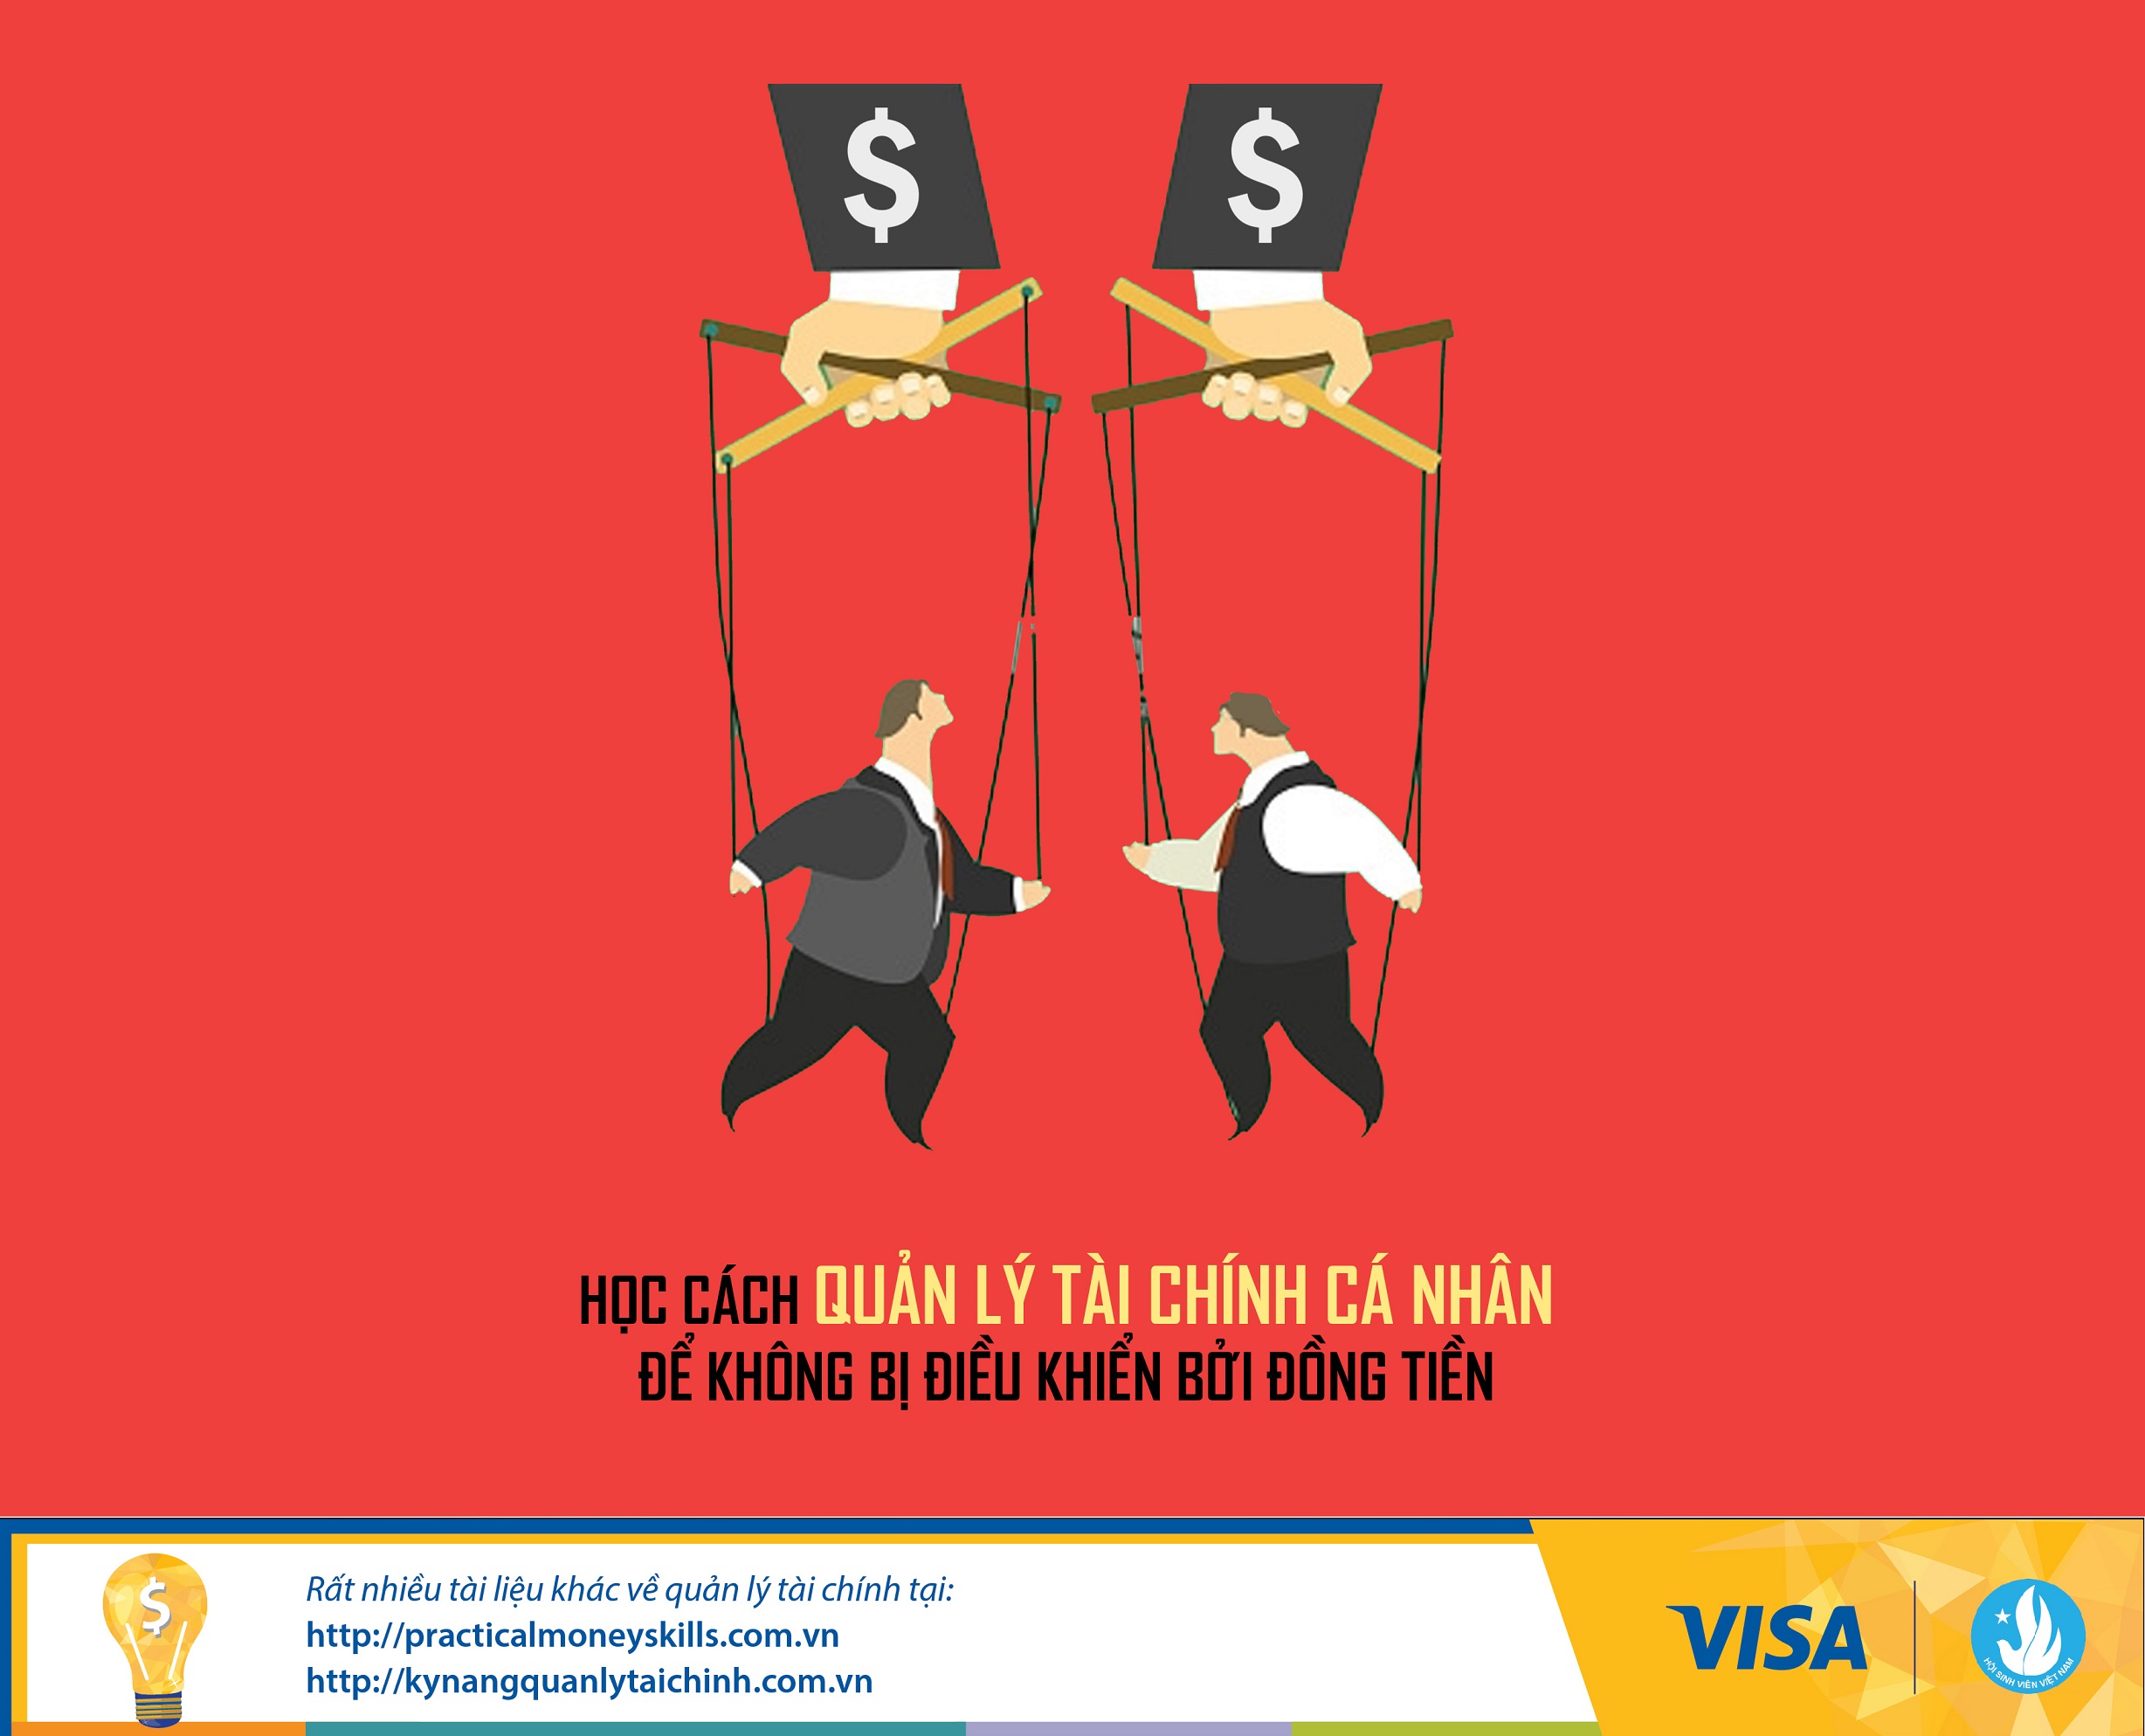 visas national practical money skills art exhibition hits the road in vietnam